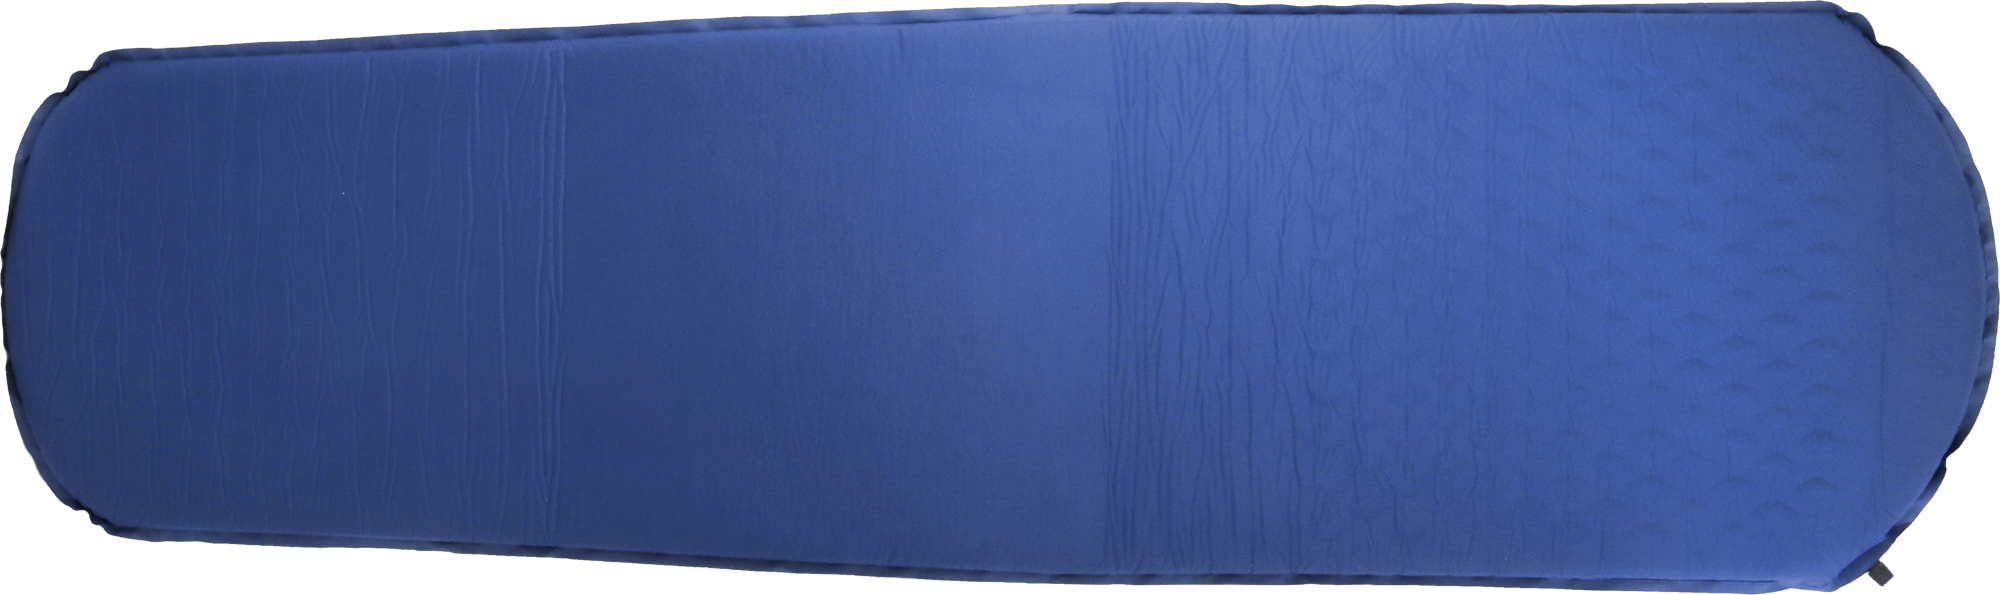 Origin Outdoors Easy selbstaufblasende Isomatte 183 x 51 cm blau